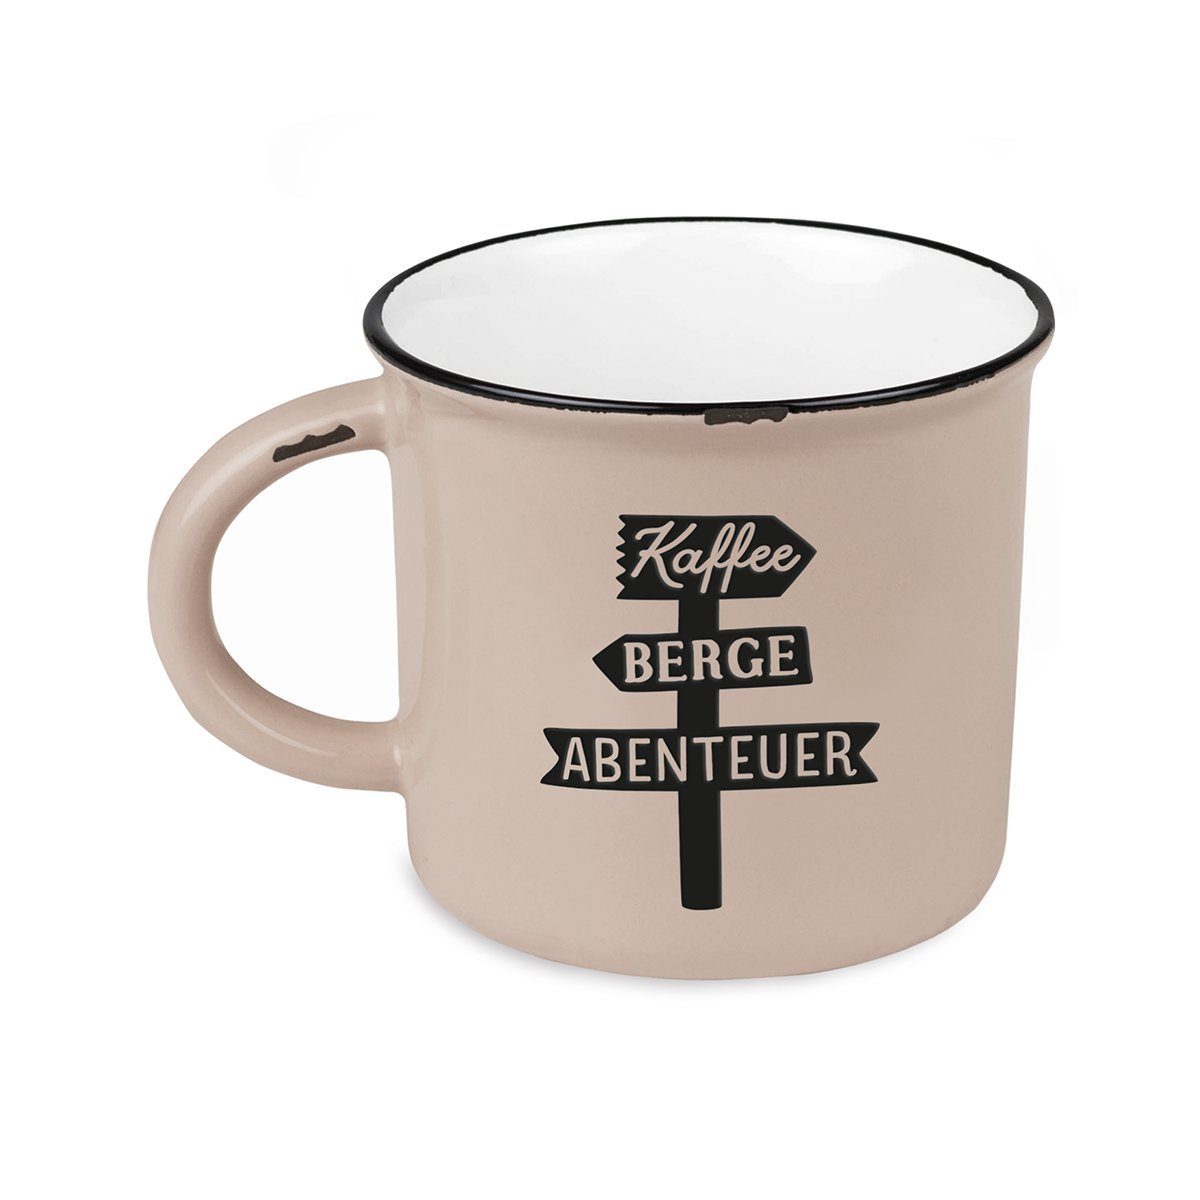 Grafik Tasse Vintage-Tasse Werkstatt Abenteuer, Kaffee Bergglück Emaille-Look Keramik im Berge